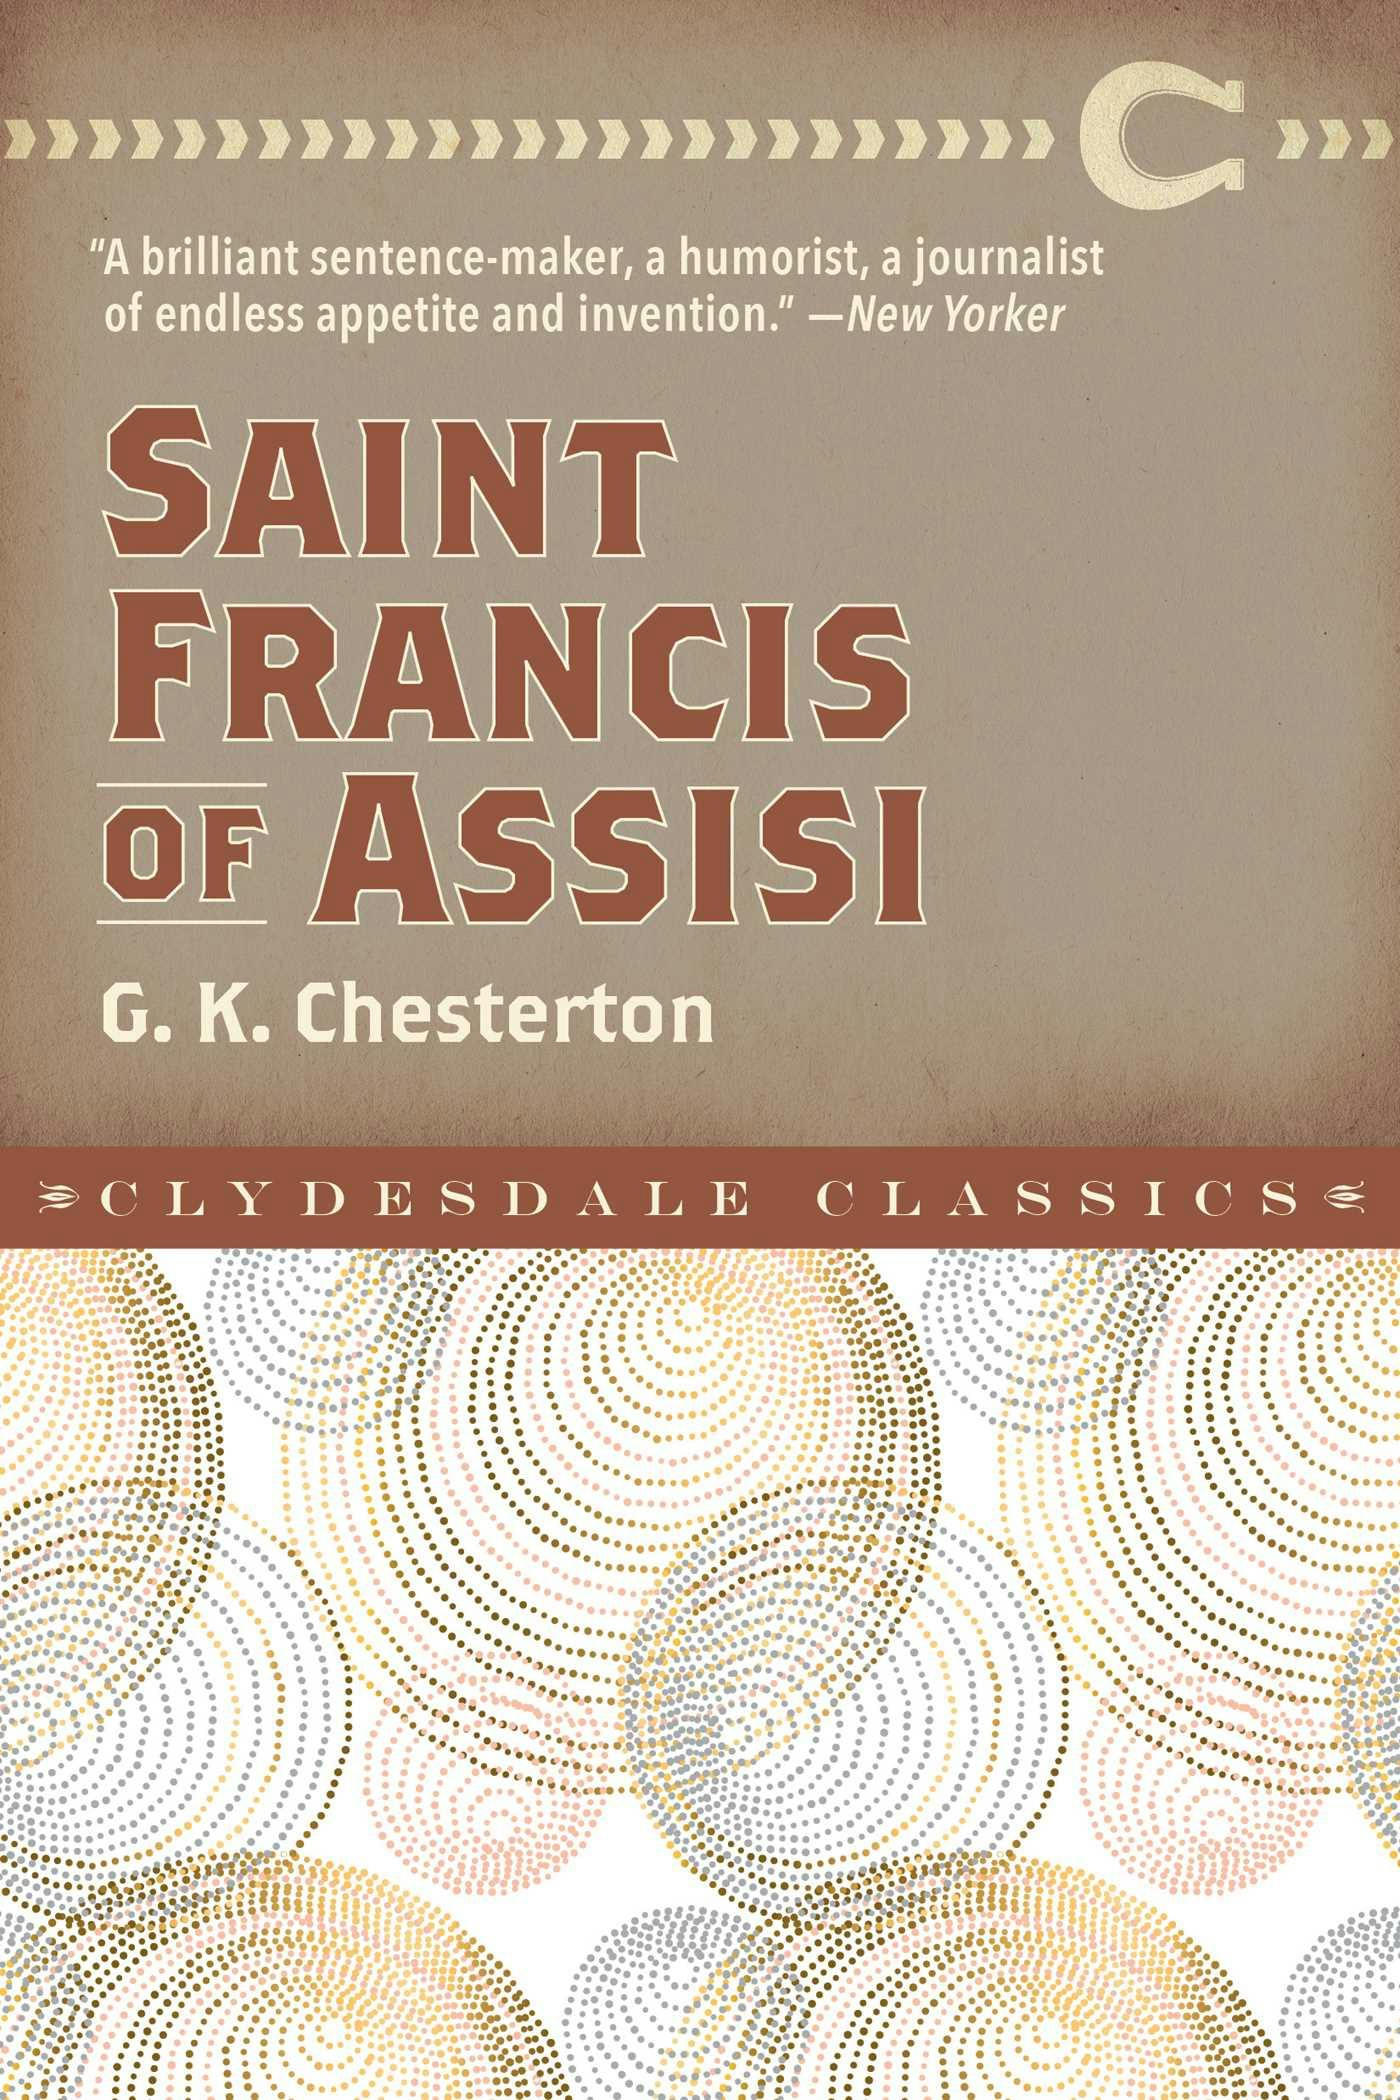 Saint Francis of Assisi - G. K. Chesterton